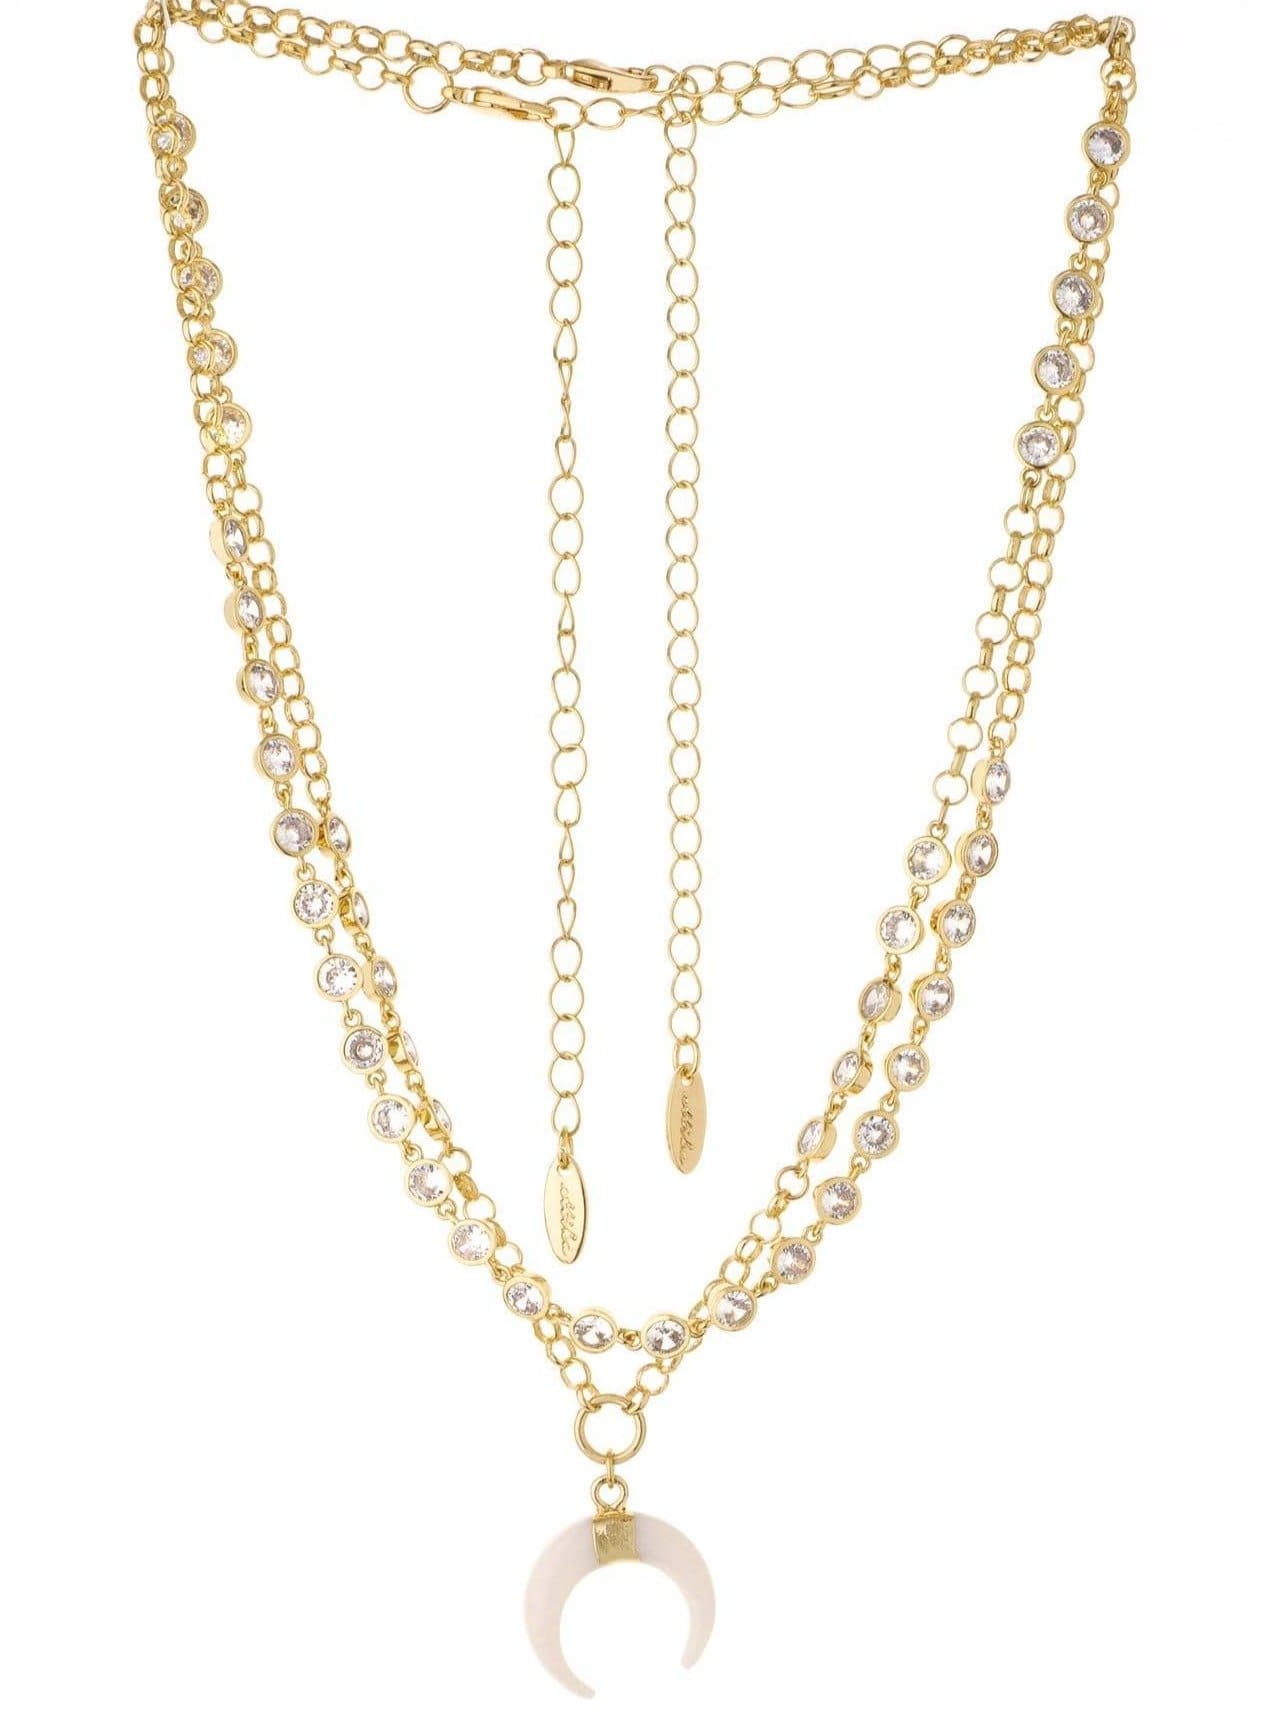 ettika necklace 18k GOLD CRYSTAL HORN SET // NECKLACE